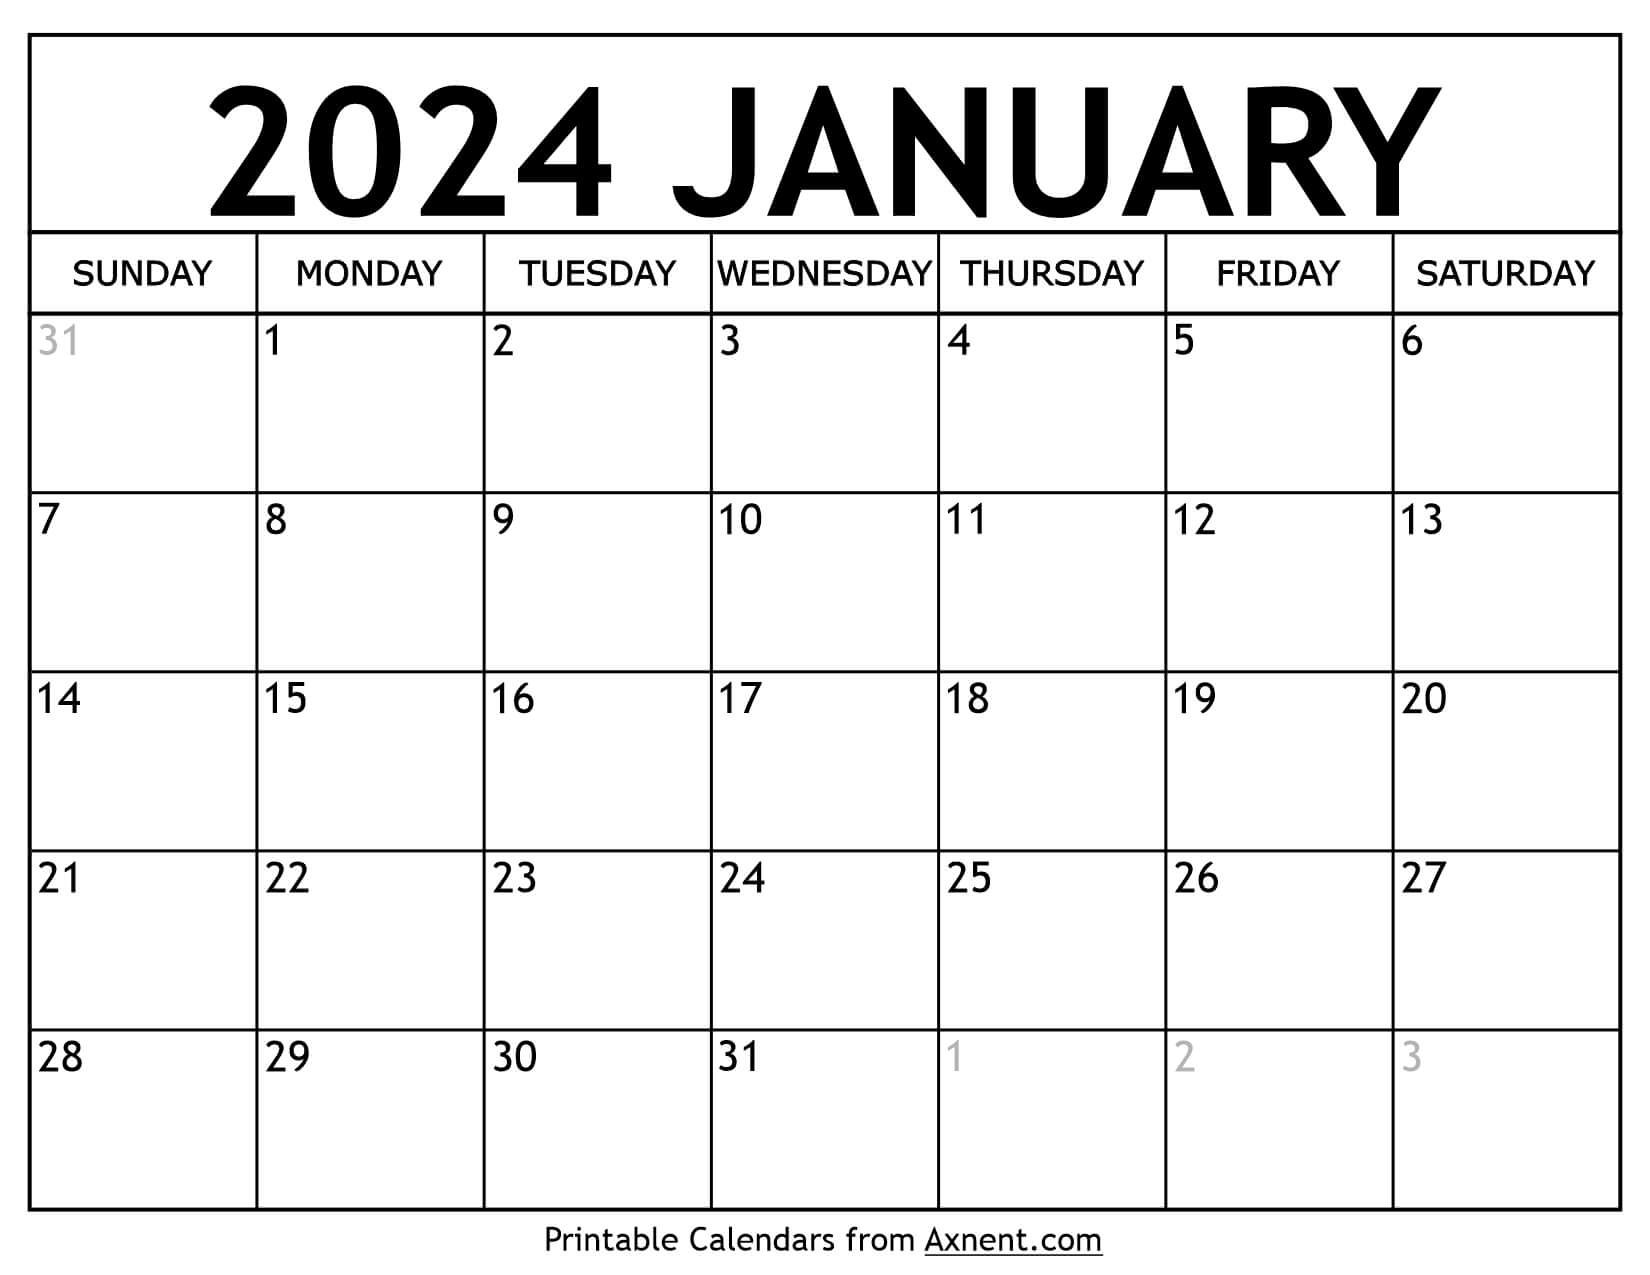 Printable January 2024 Calendar Template - Print Now for Free Printable Calendar January 2024